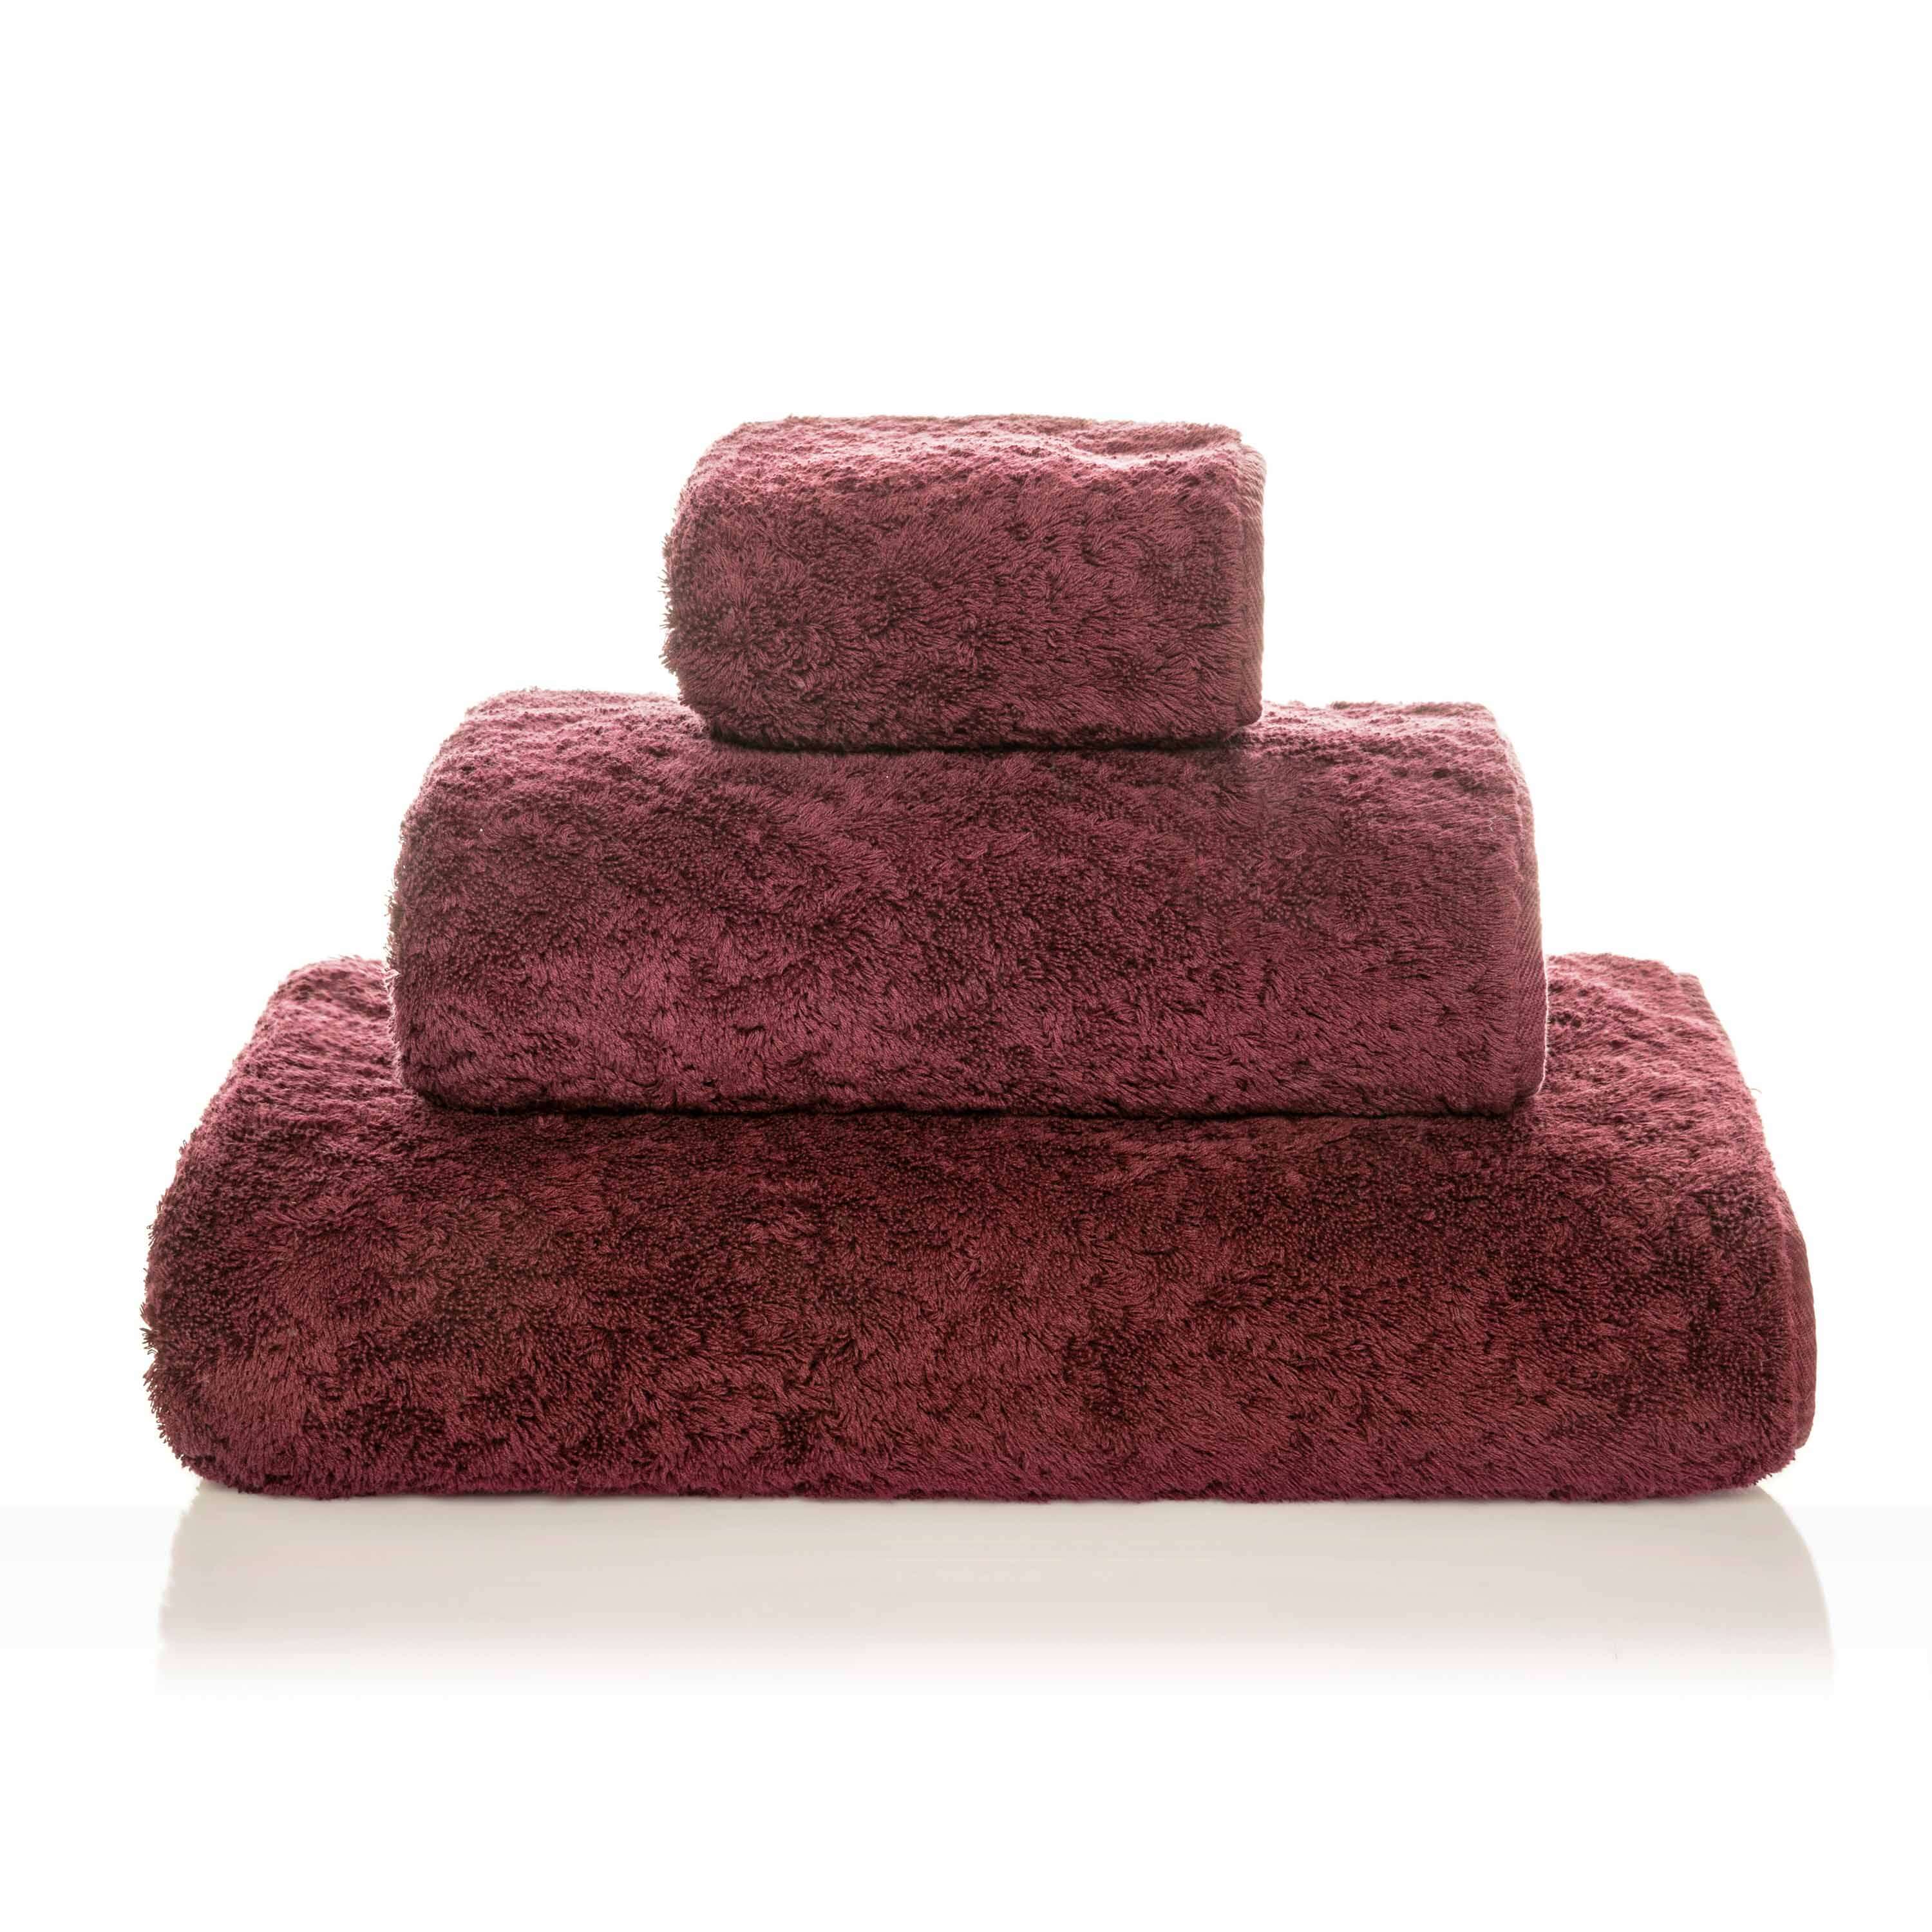 Элитное полотенце Egoist Range Bordeaux ☞ Размер: 95 x 150 см